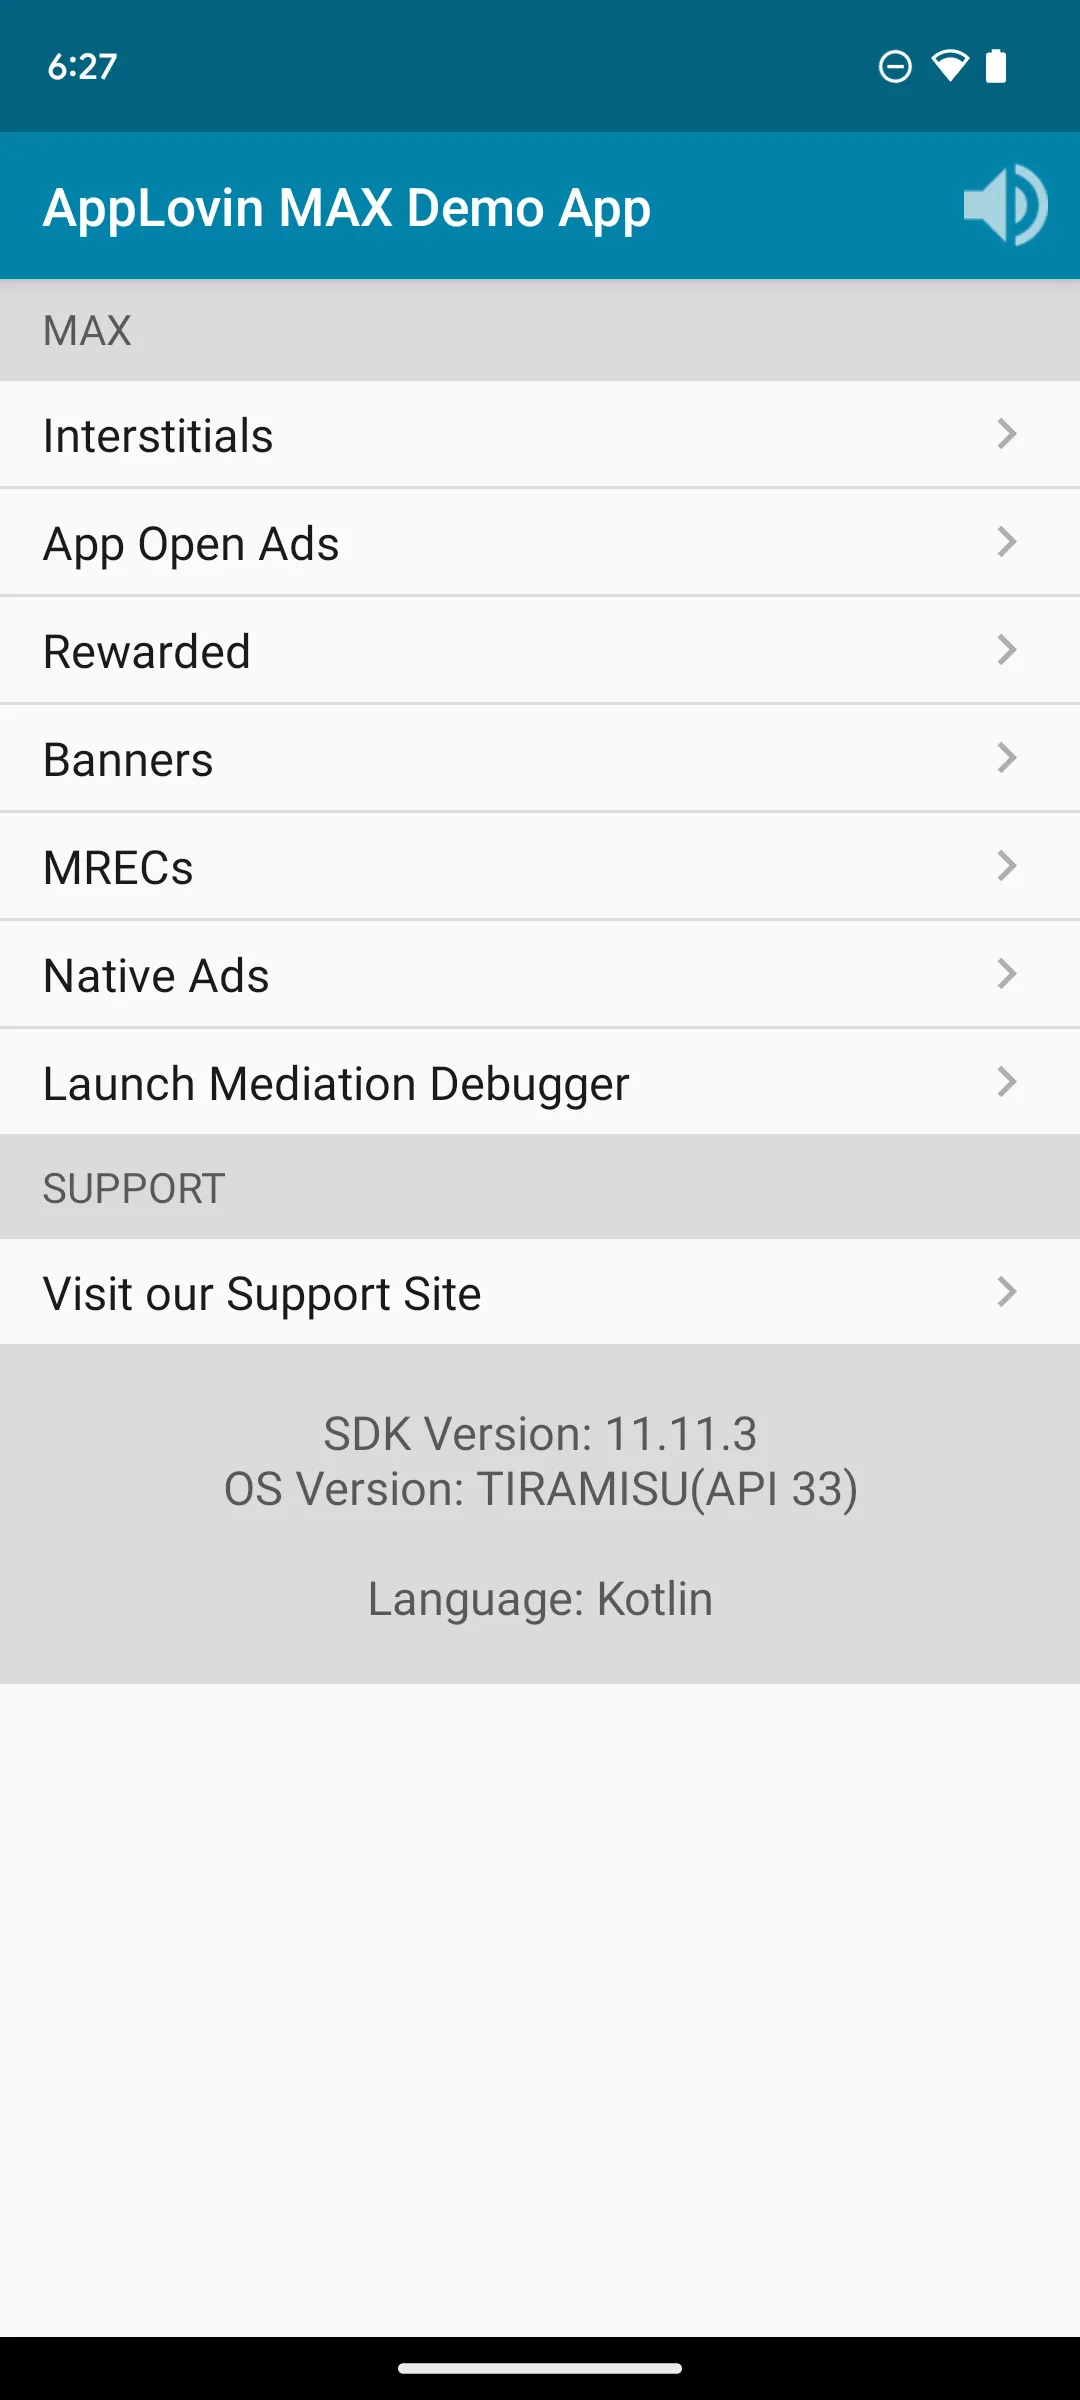 AppLovin MAX Demo App. MAX: Interstitials, App Open Ads, Rewarded, Banners, MRECs, Native Ads, Launch Mediation Debugger. Support: Visit our Support Site. SDK Version: 11.11.3. OS Version: TIRAMISU(API 33). Language: Kotlin